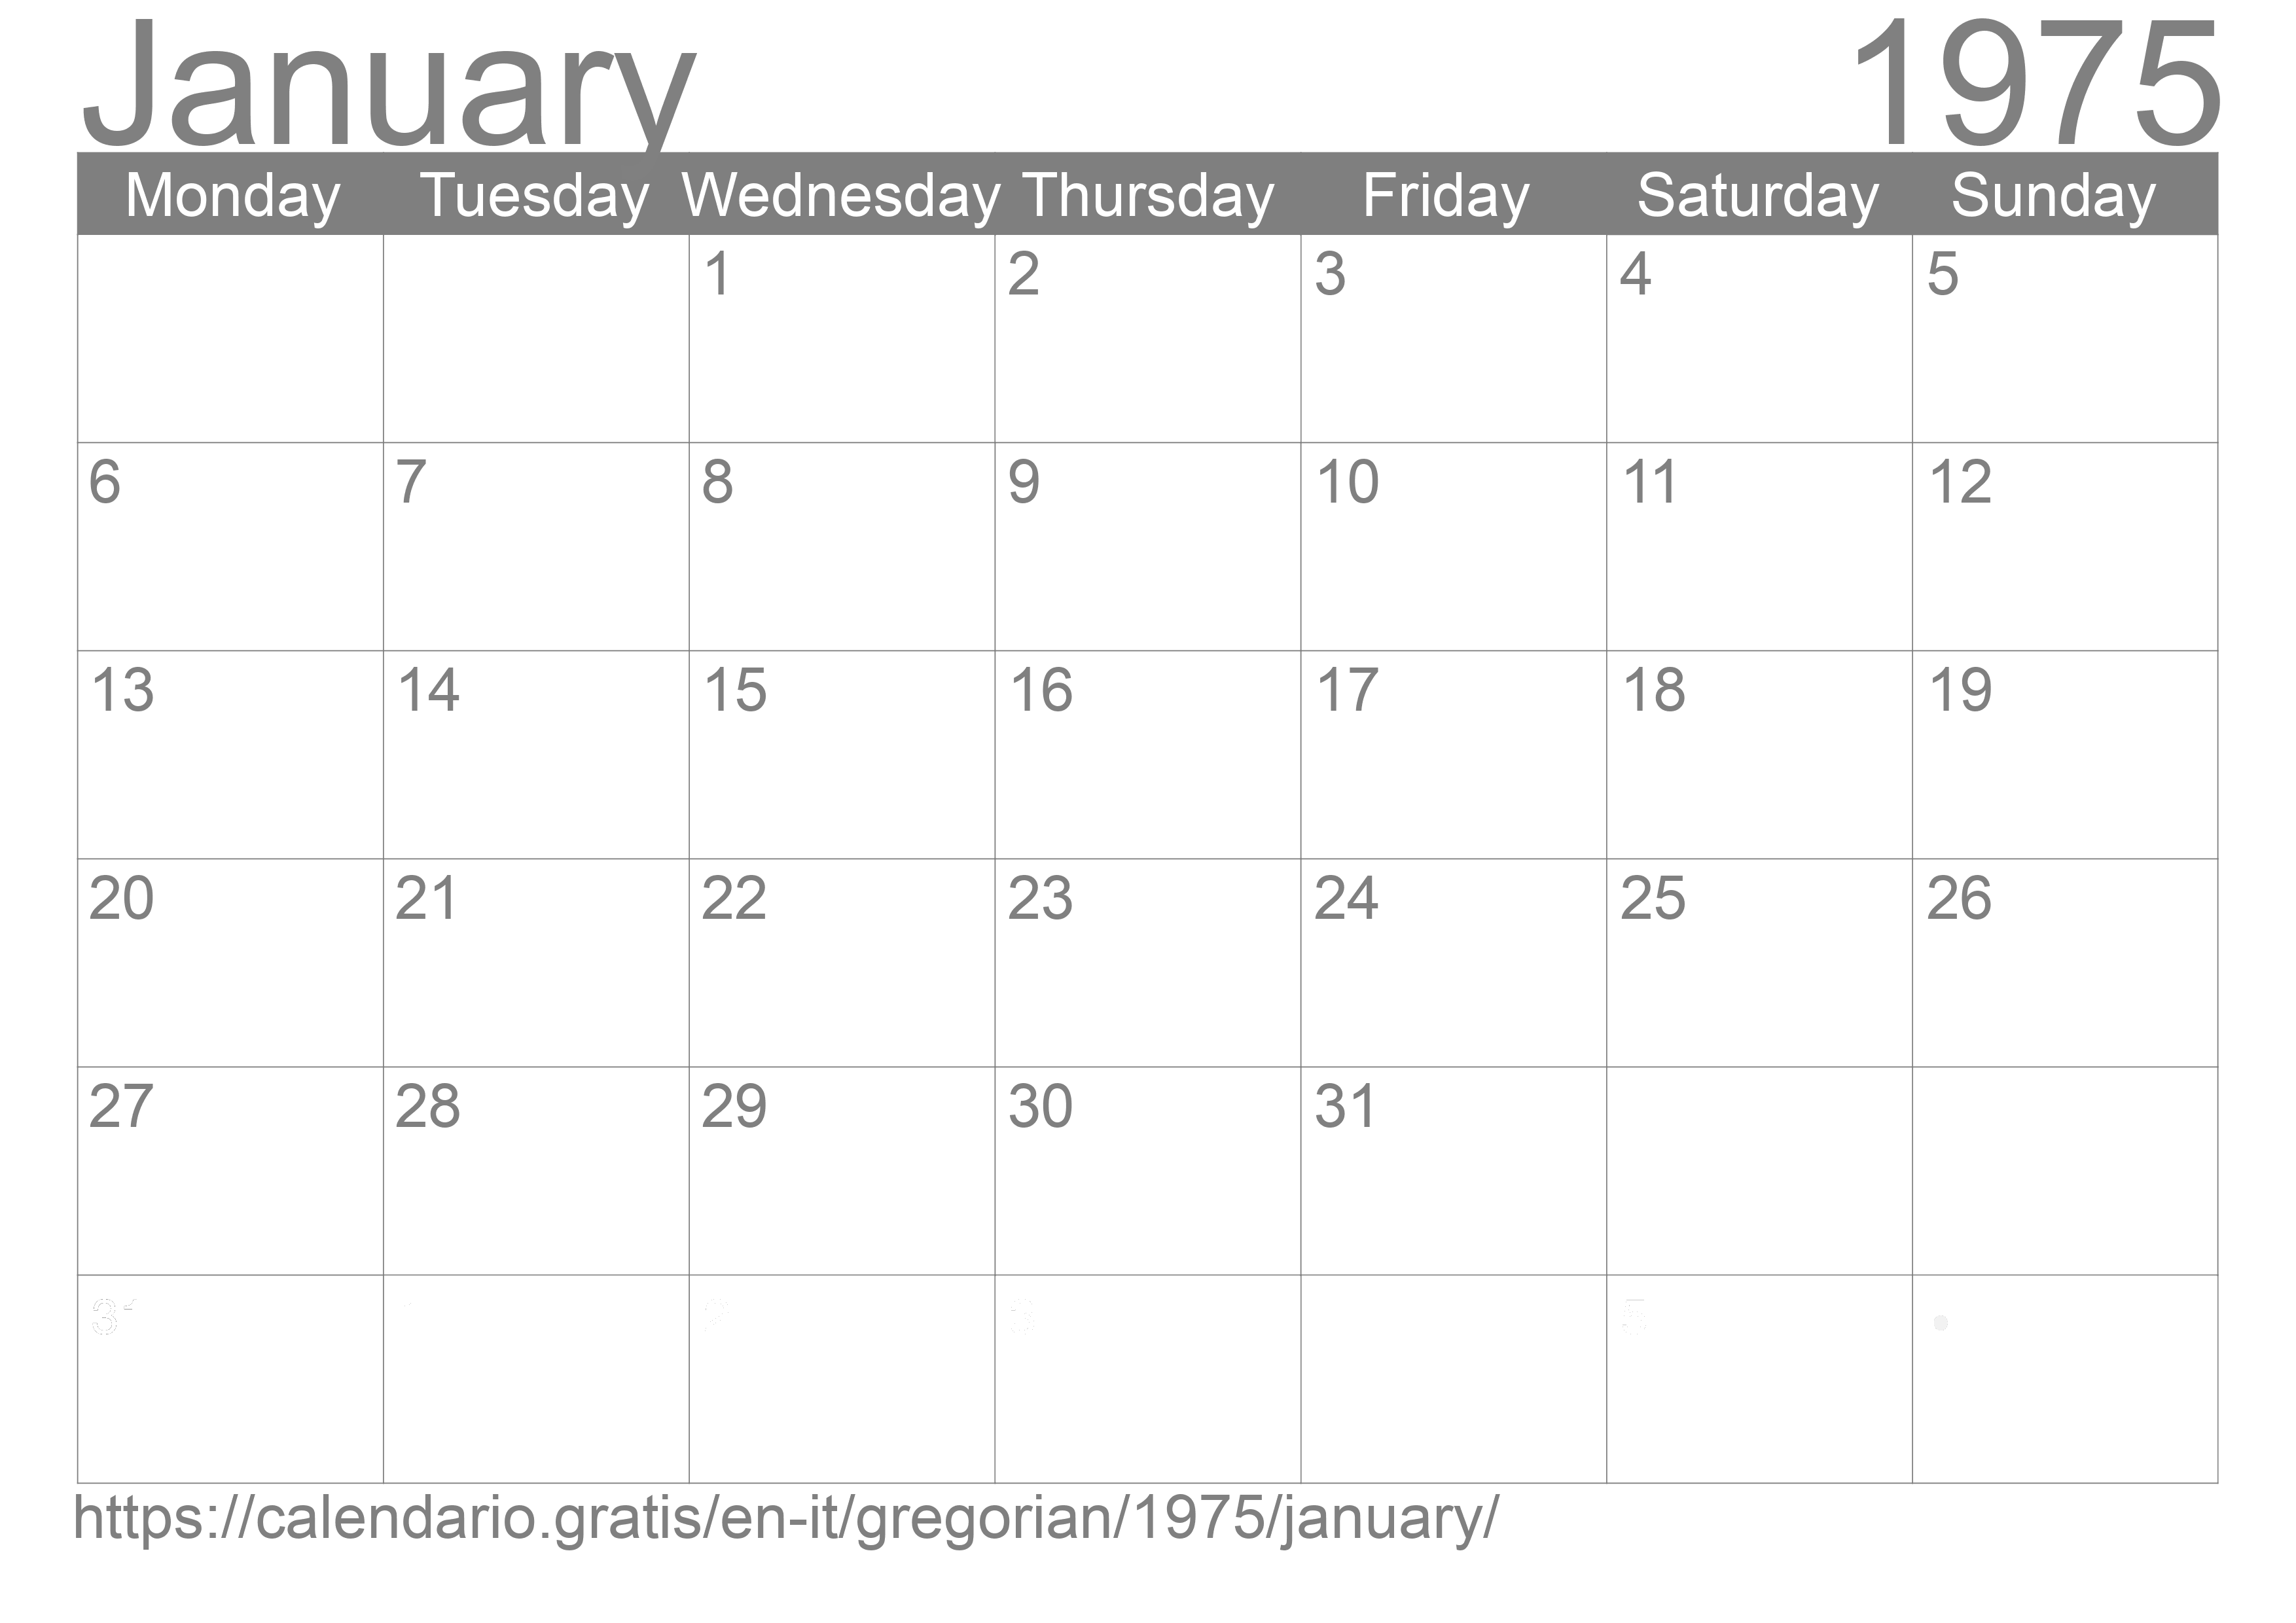 Calendar January 1975 to print